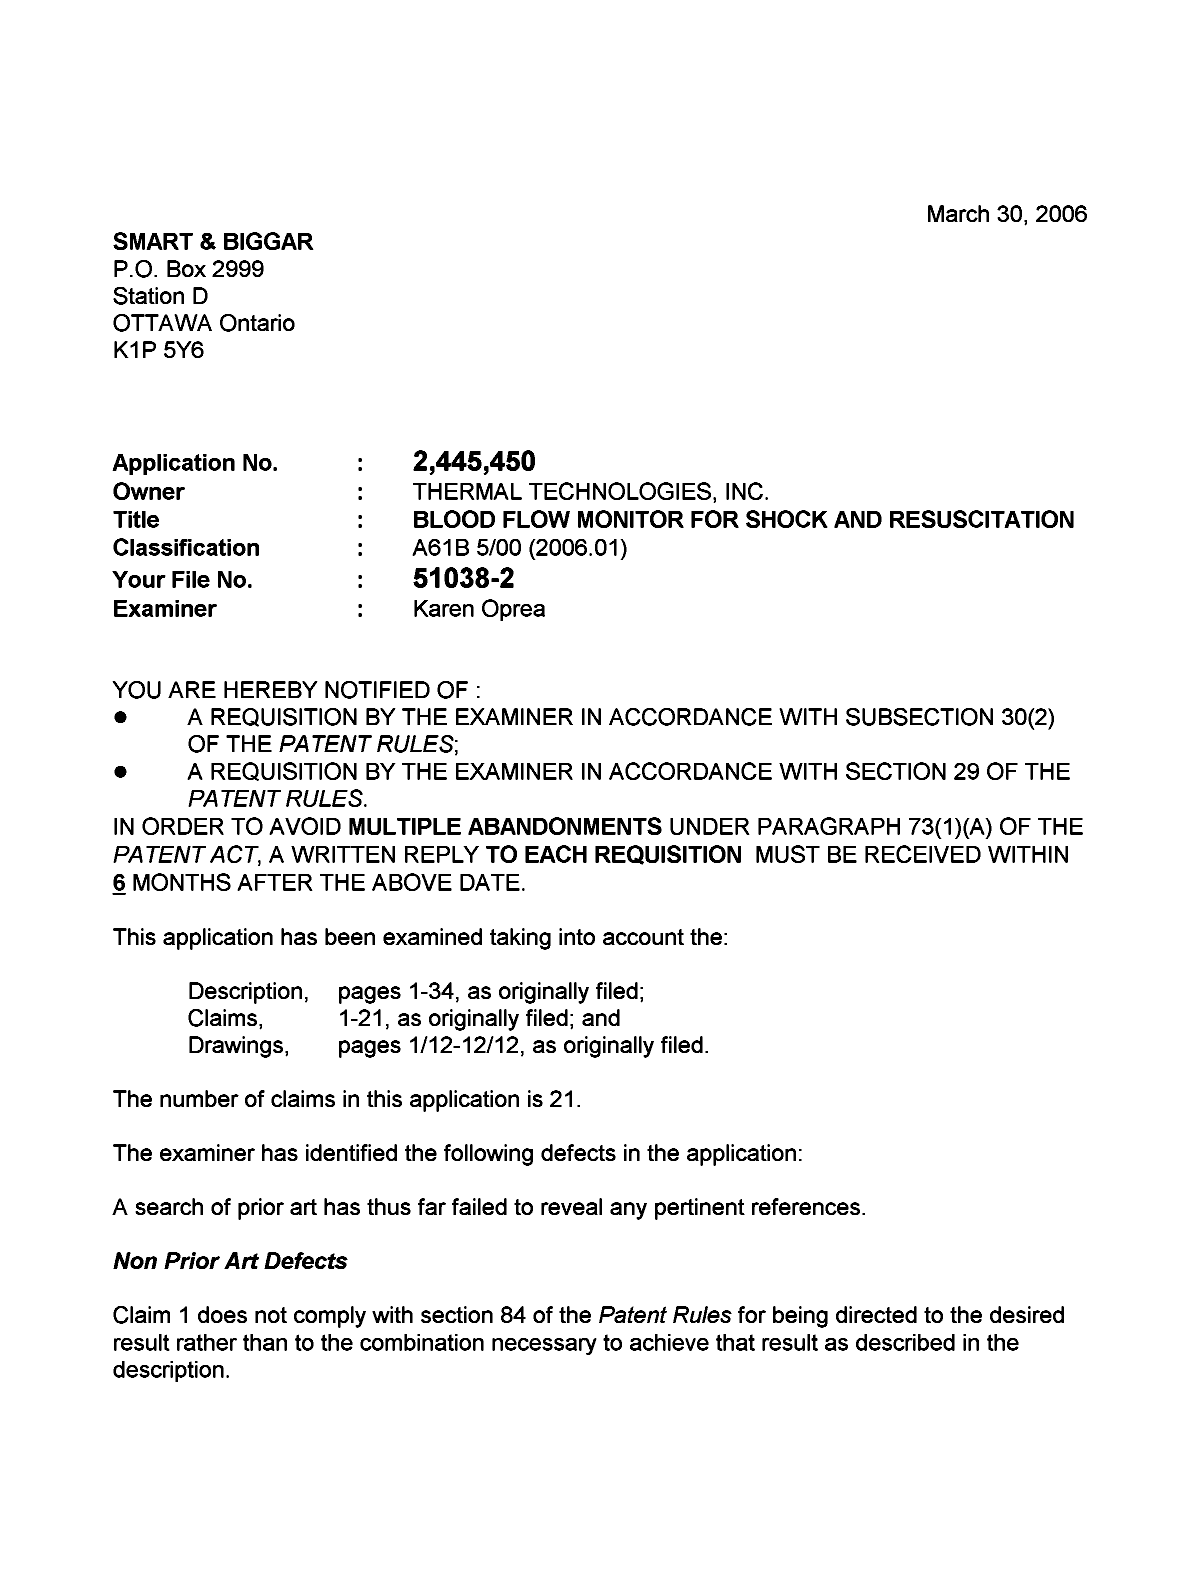 Canadian Patent Document 2445450. Prosecution-Amendment 20060330. Image 1 of 3